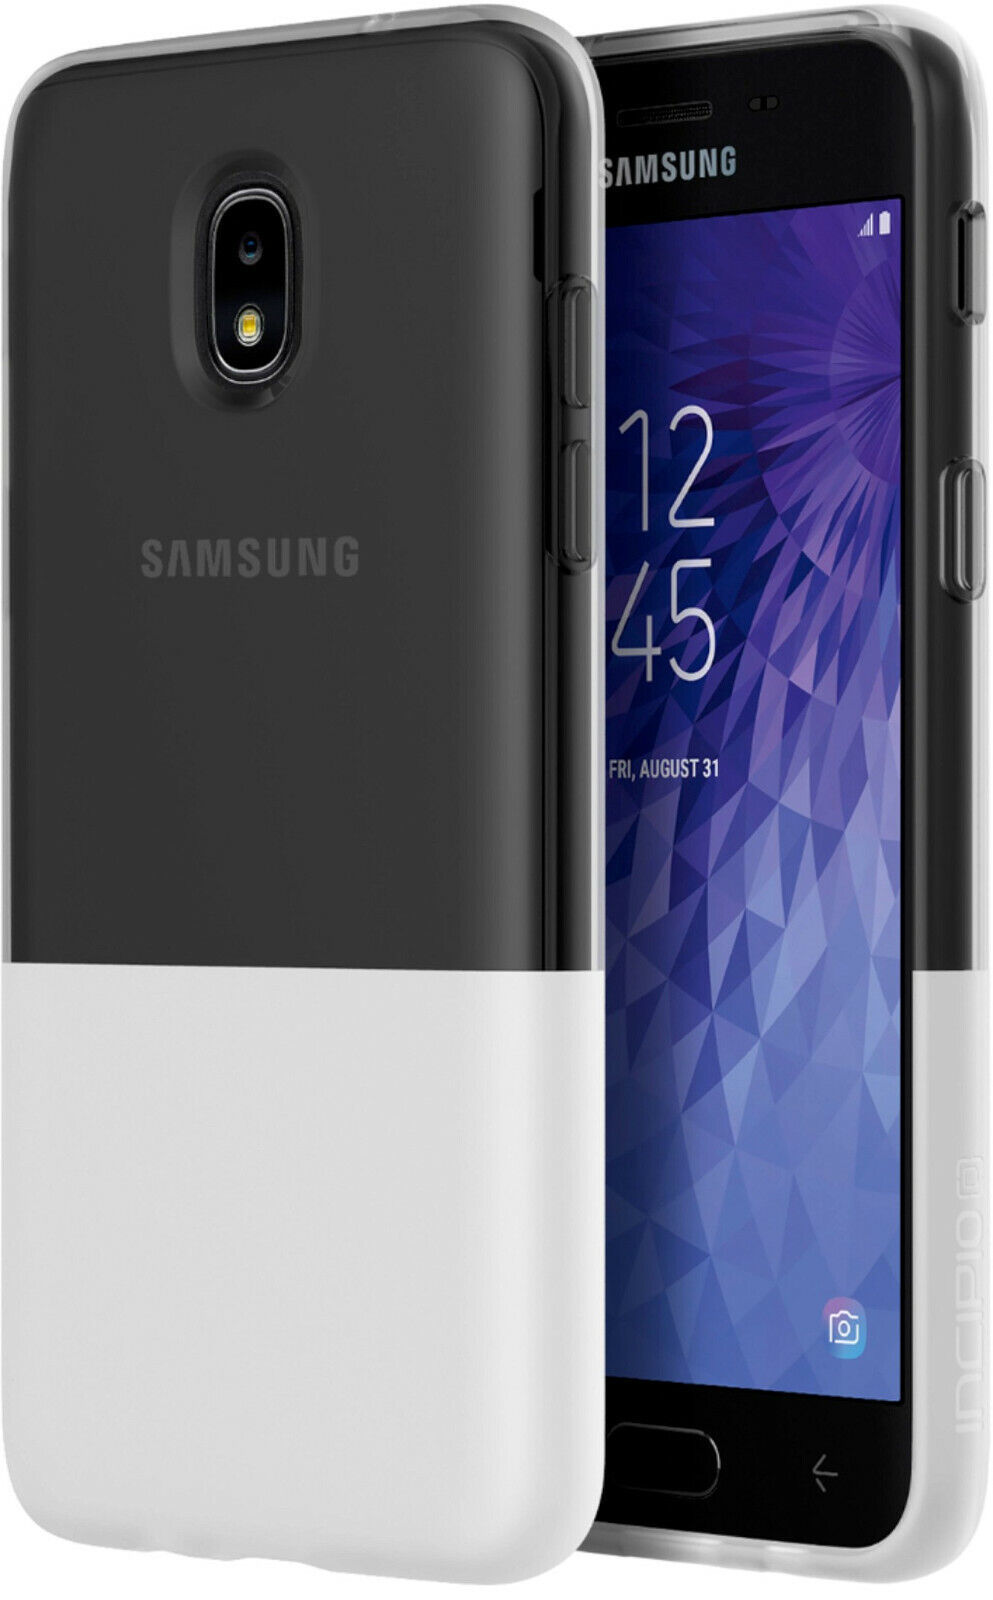 NEW Incipio NGP Clear Phone Case for Samsung Galaxy J3 2018 Orbit Prime Achieve - $5.59